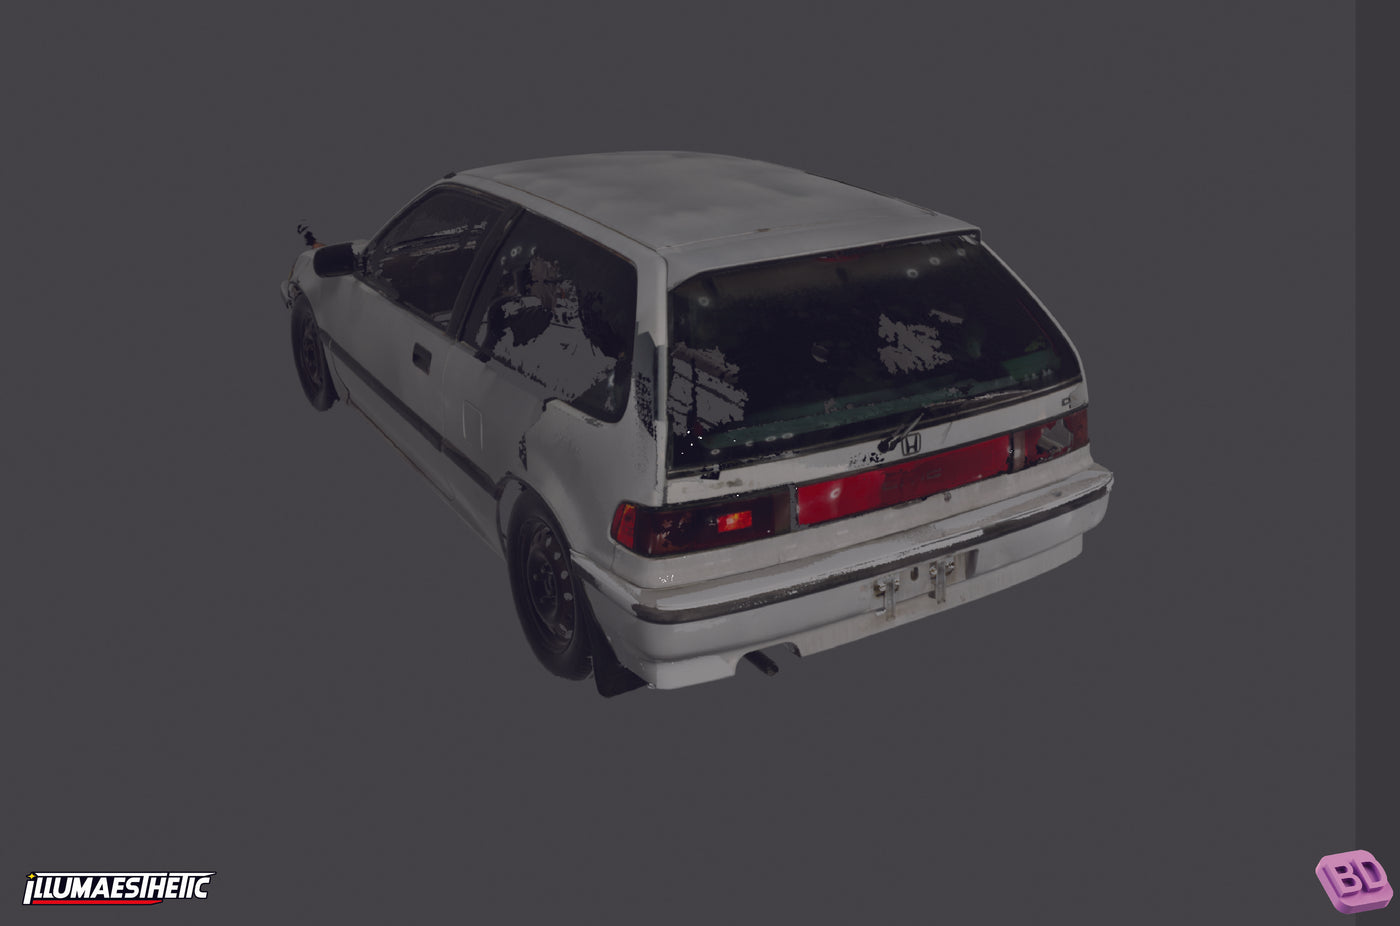 Honda Civic EF 3D Scan Data (1987-1991)